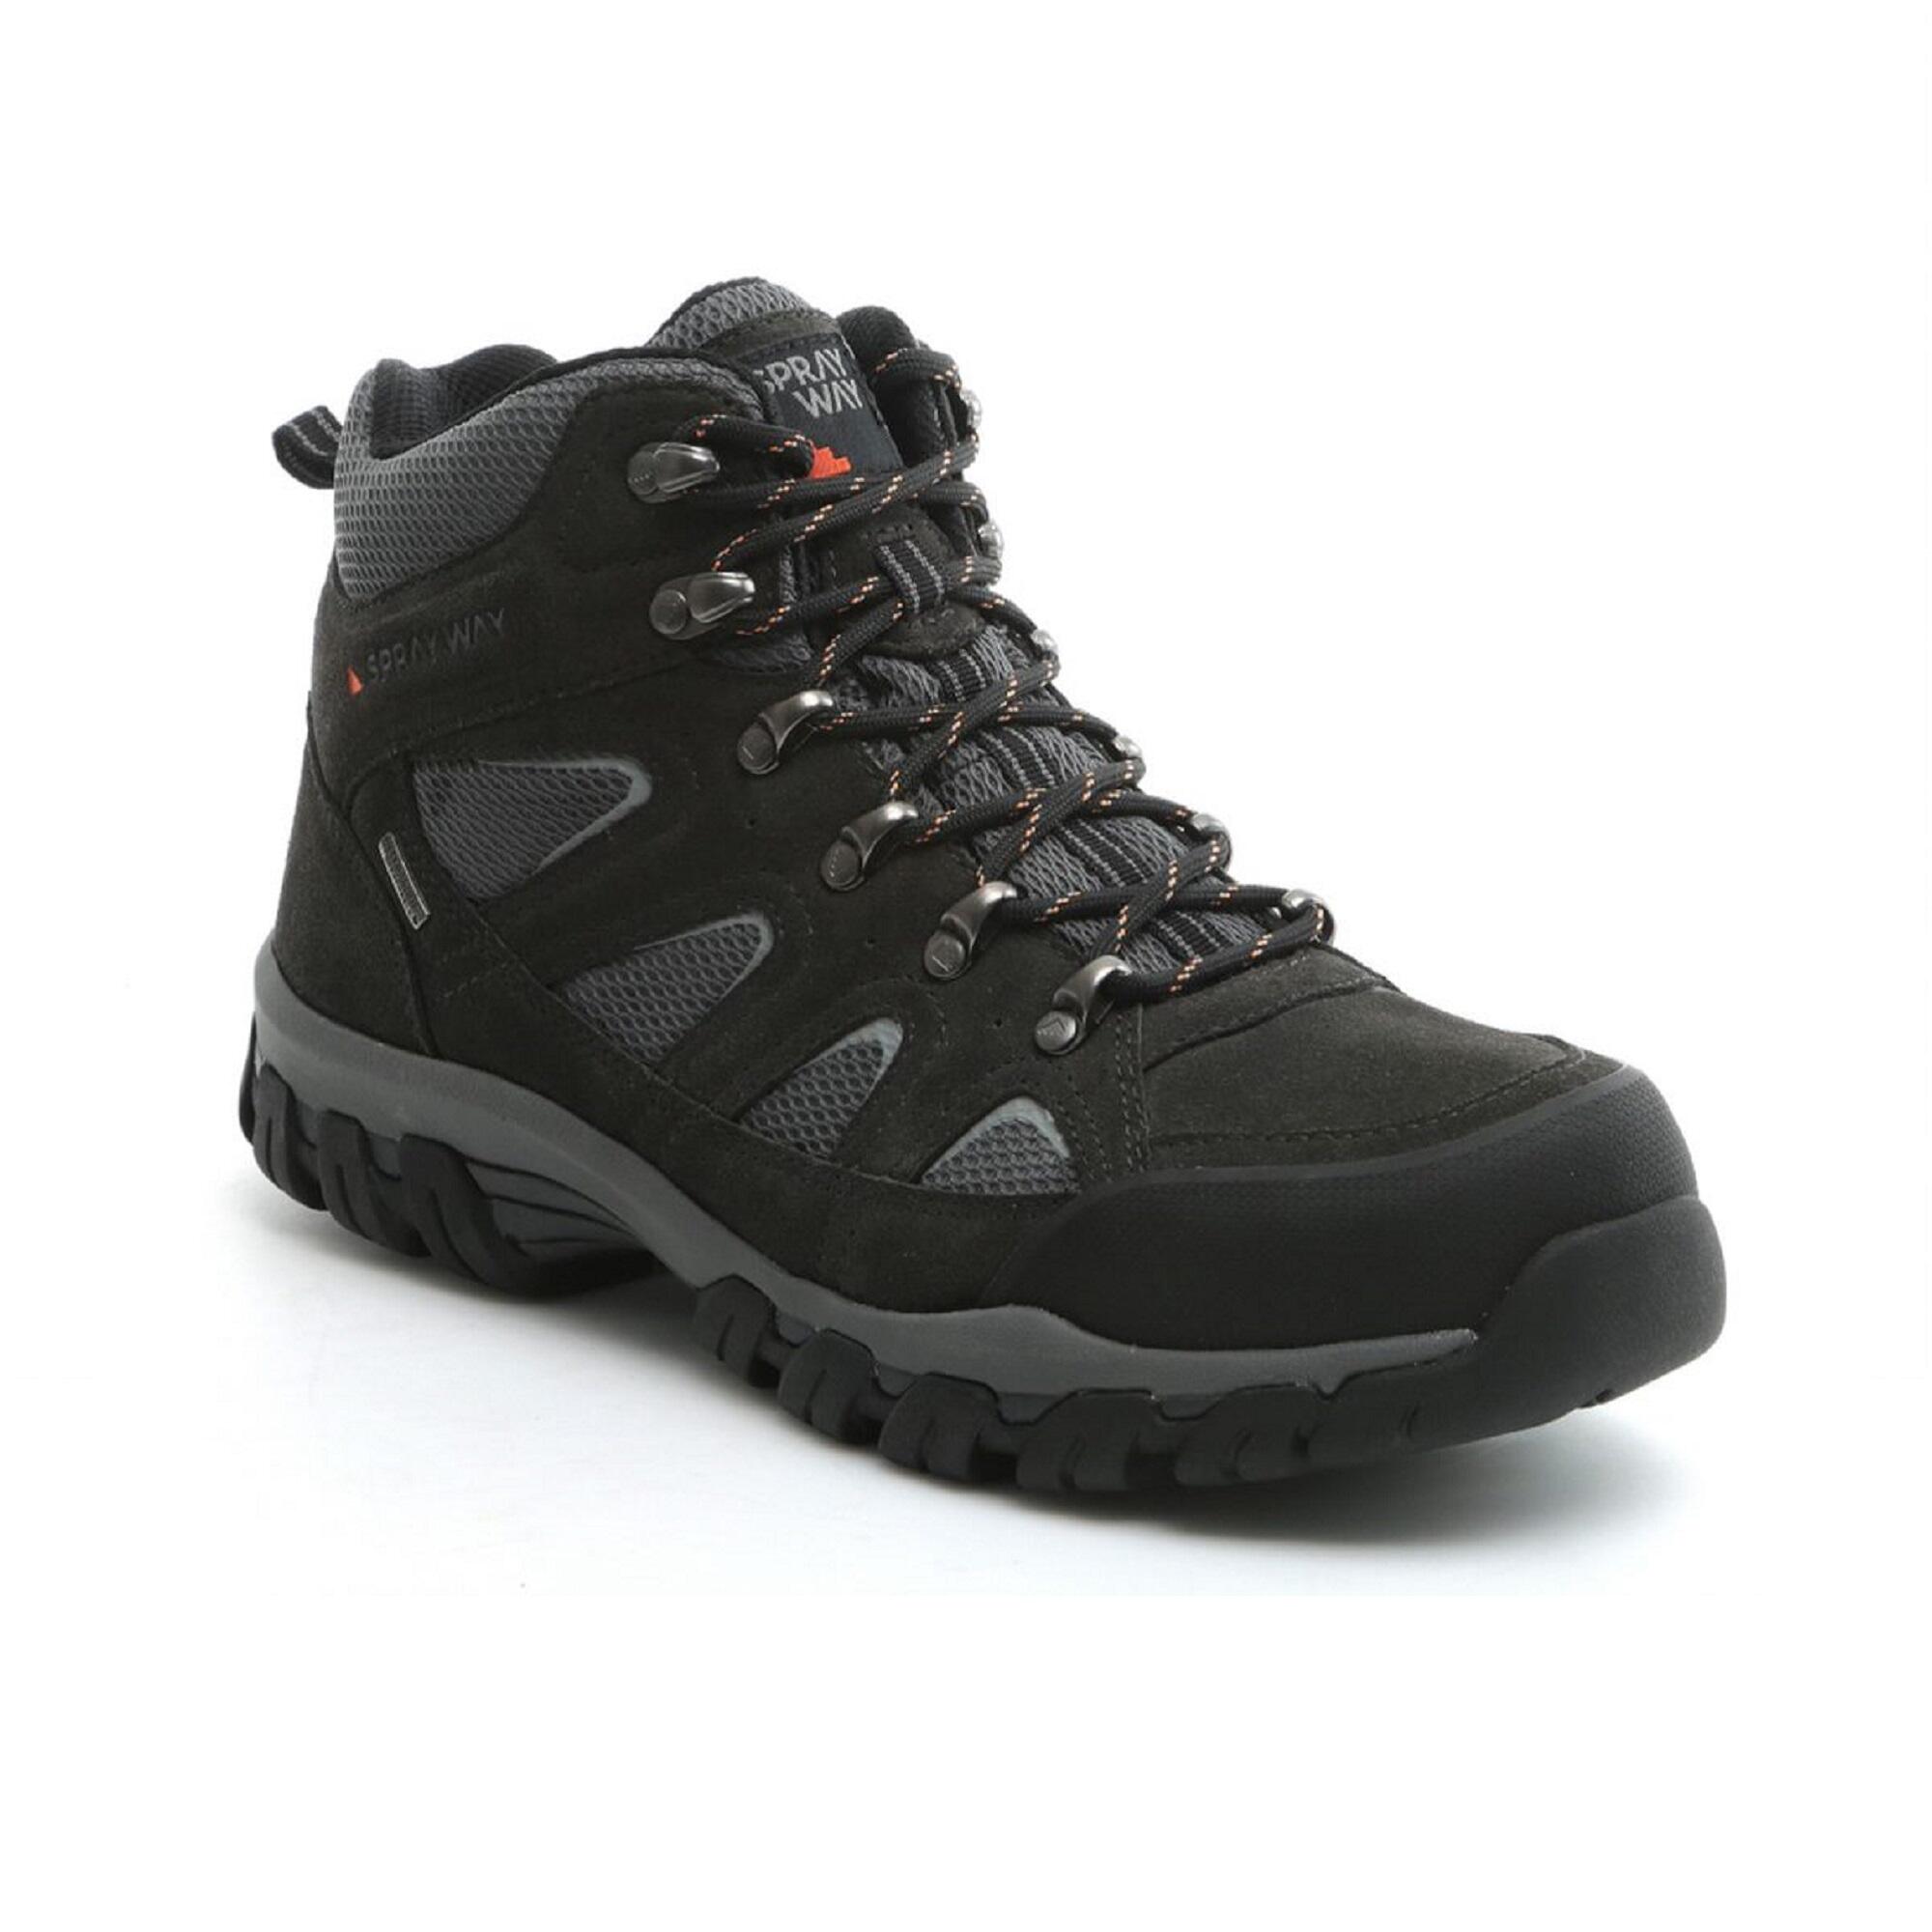 Men's Waterproof Walking Boots - Sprayway Mull Mid - Black